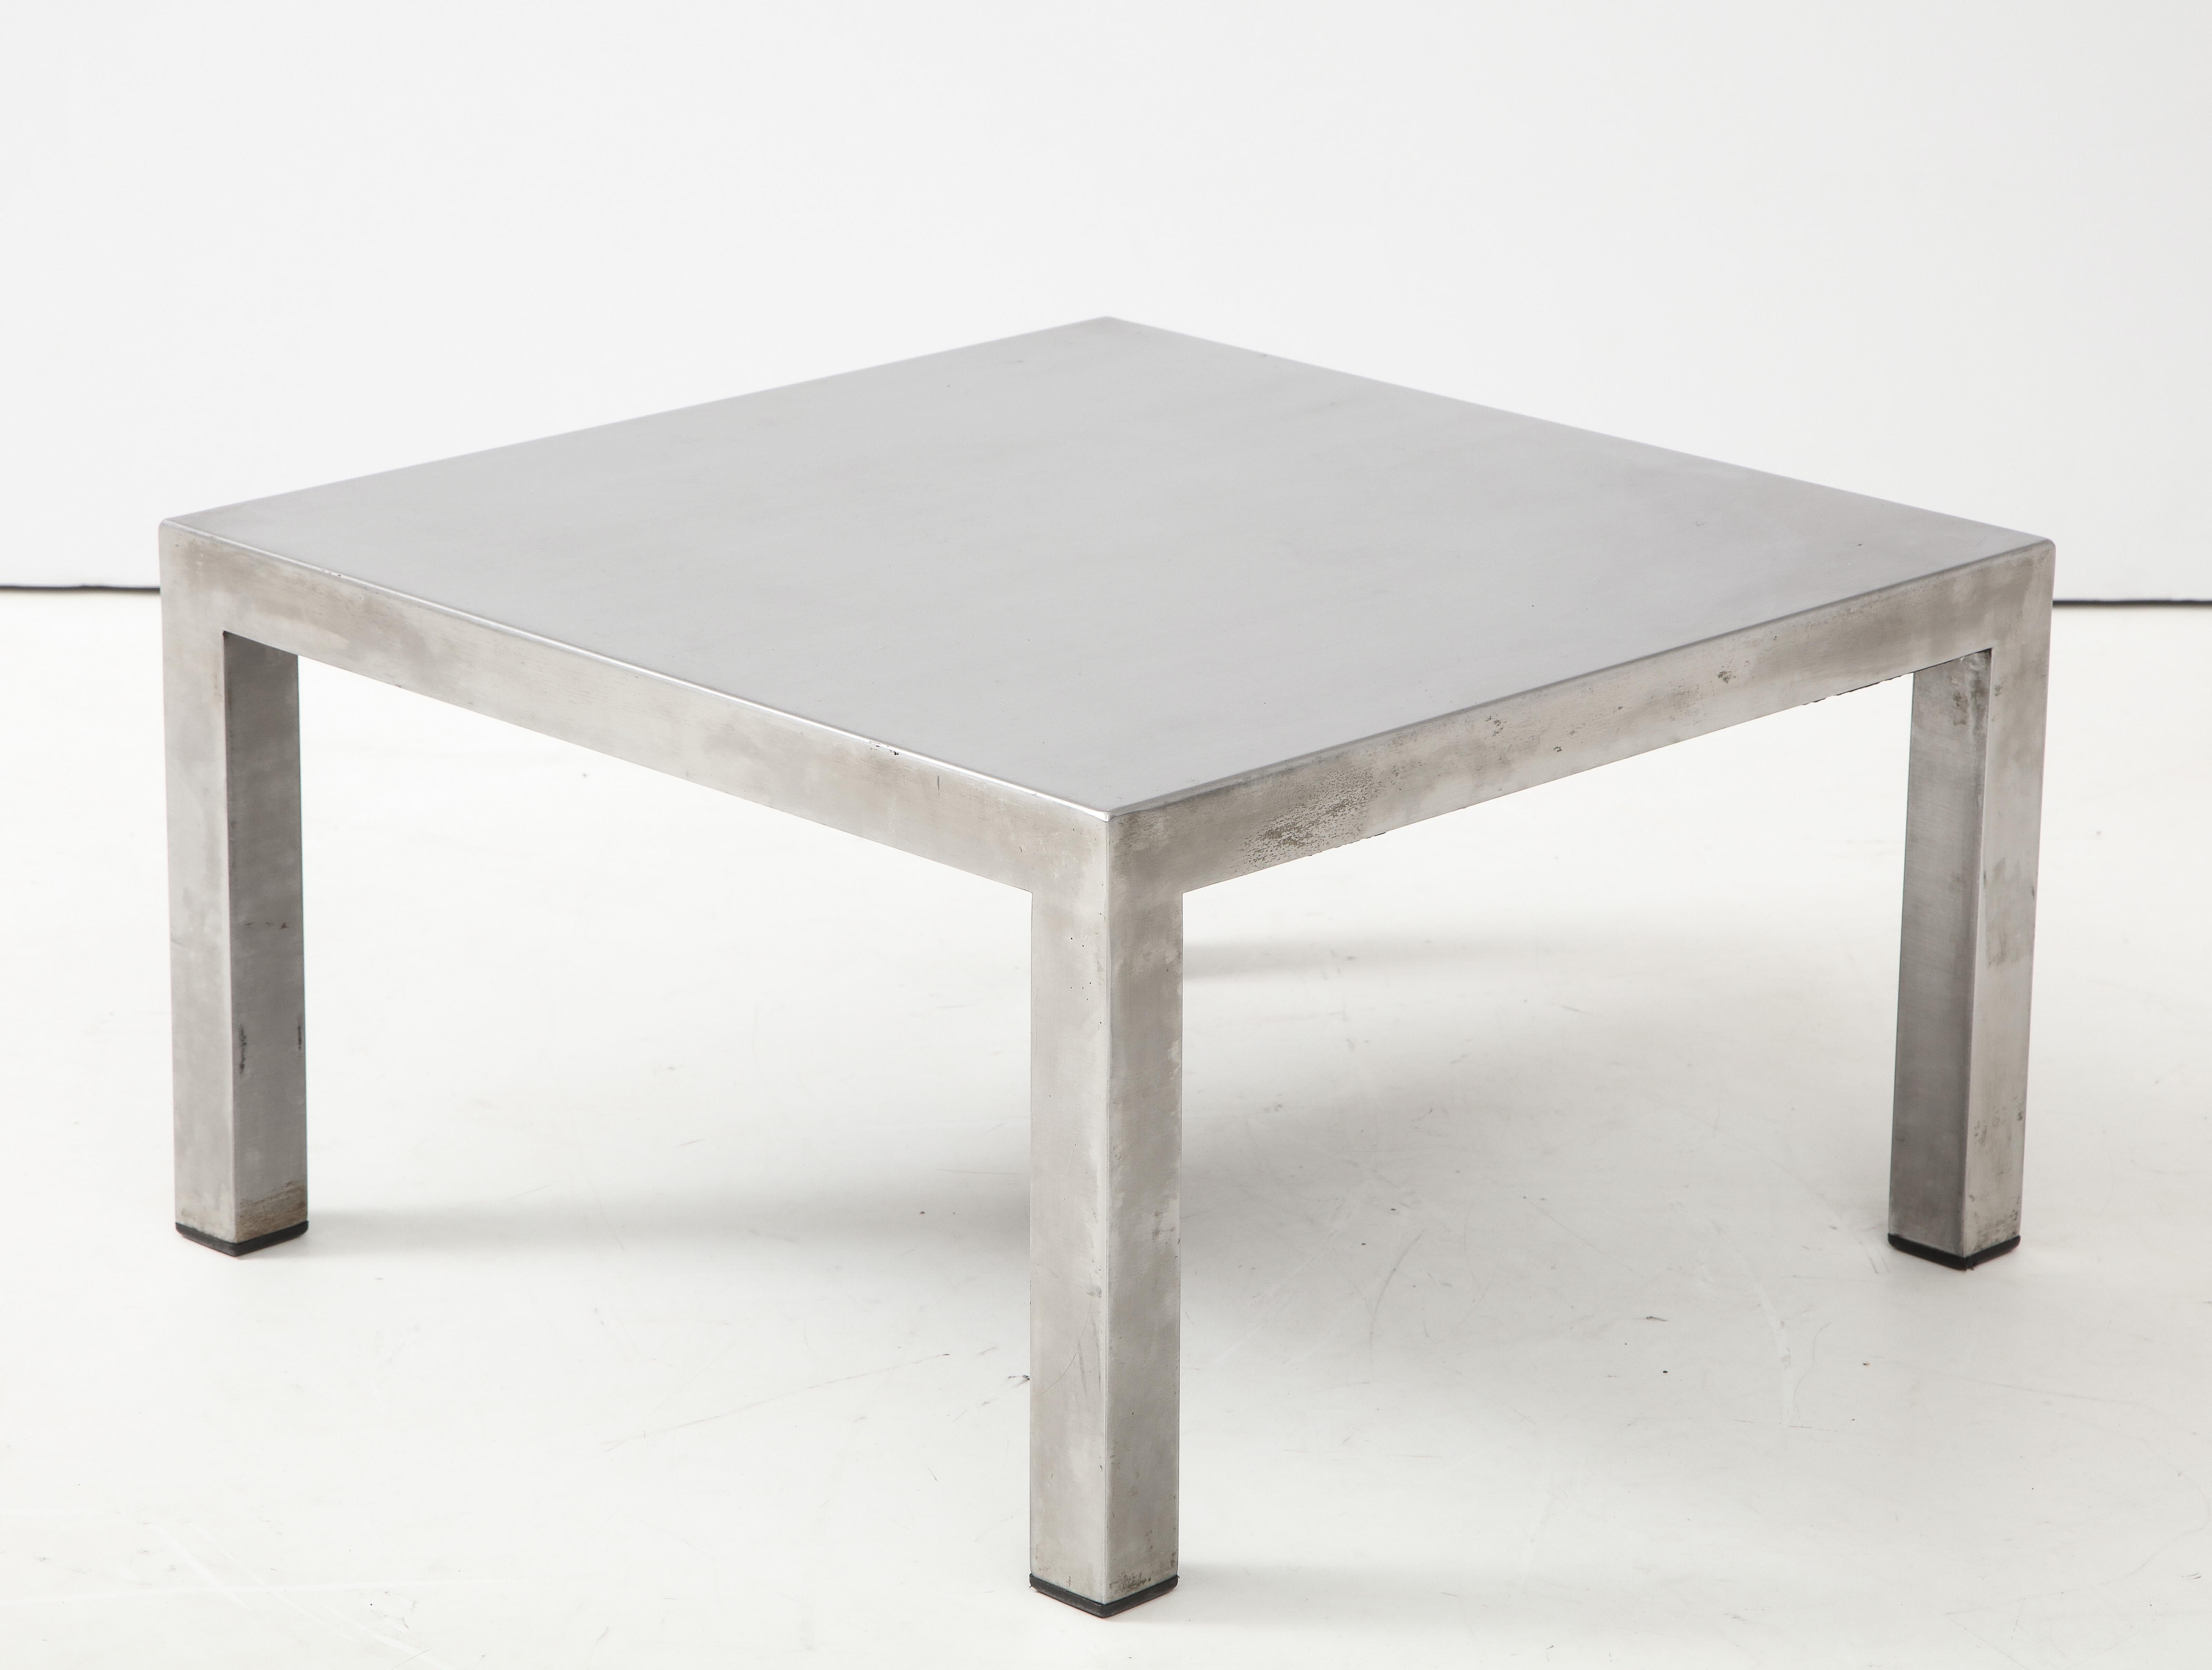 Stainless Steel Maria Pergay, Pair of Low Tables, Table Droite, Maison et Jardin, Paris, 1971